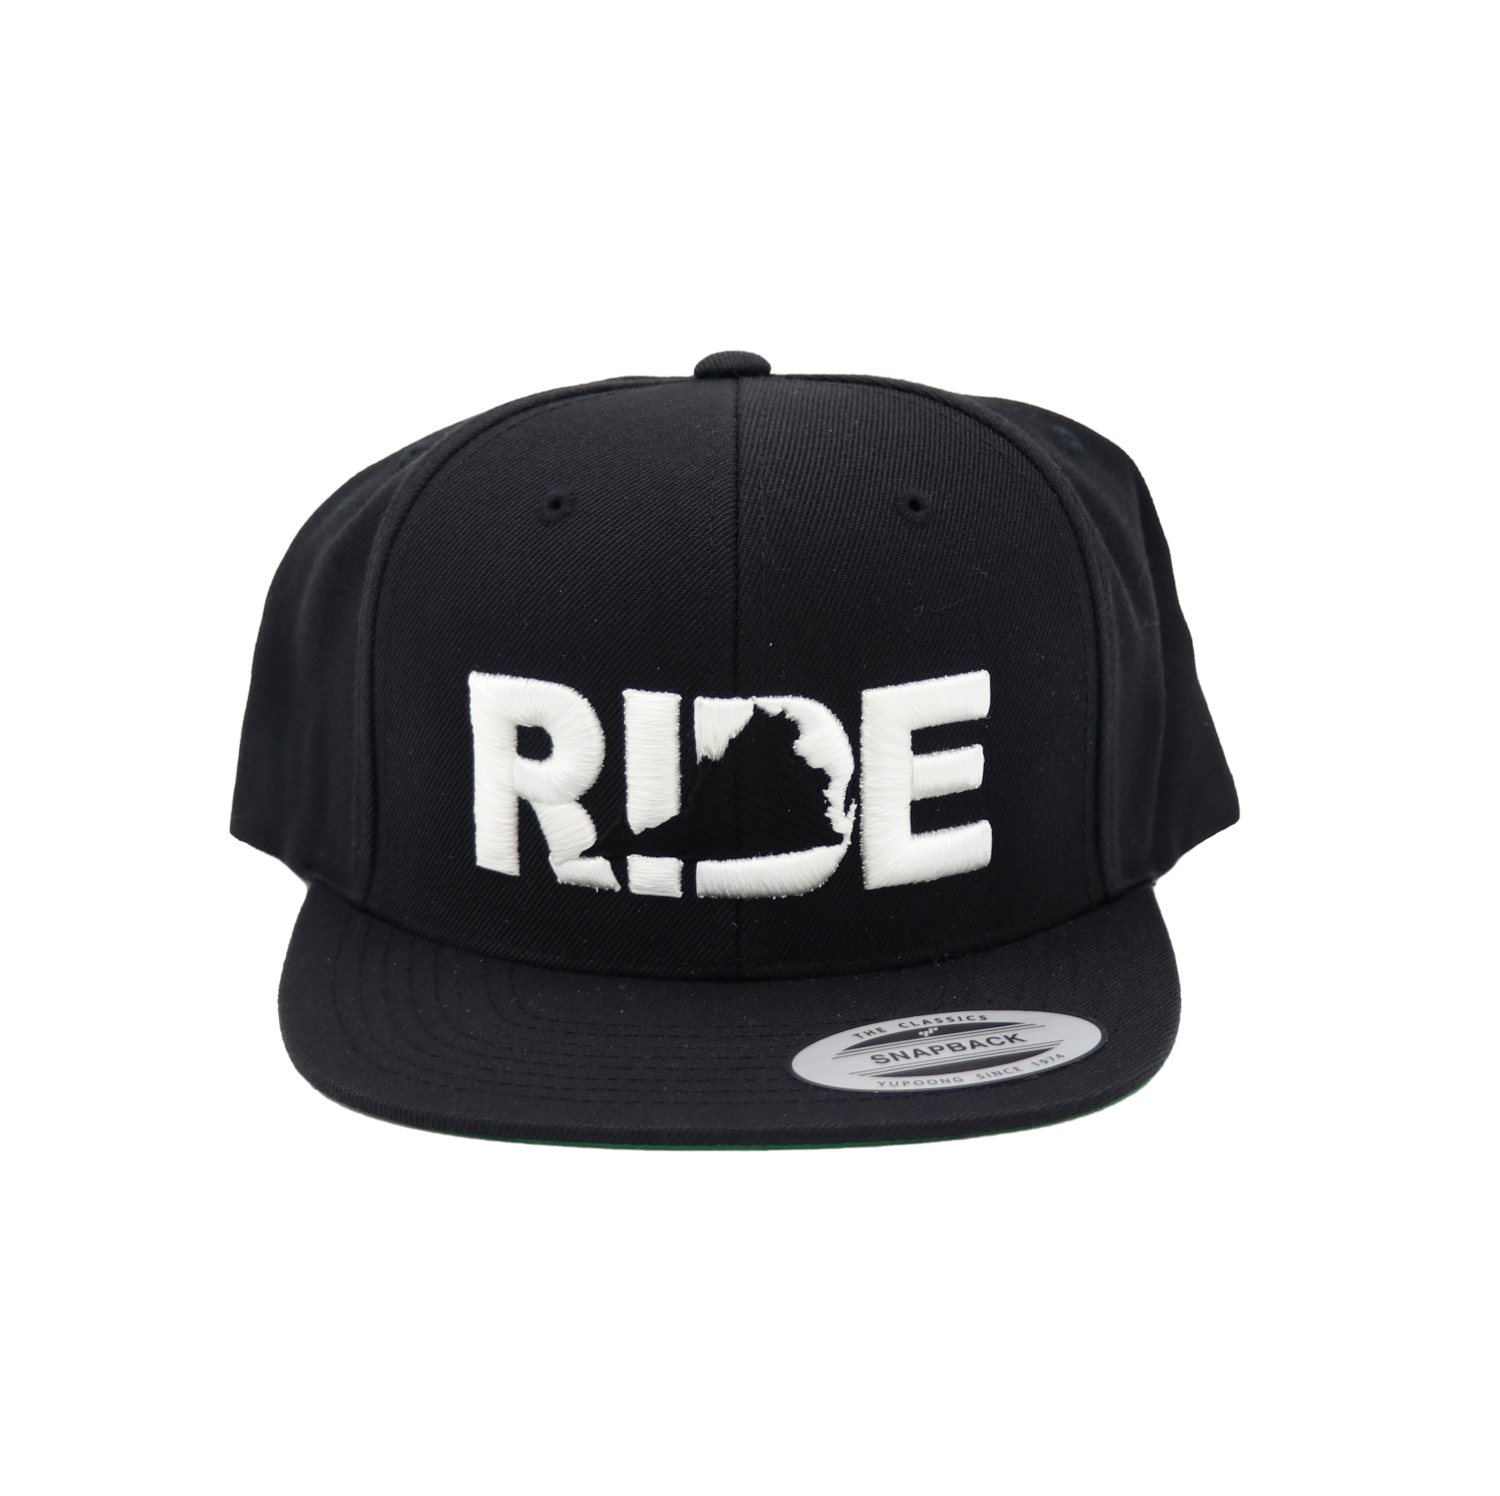 Ride Virginia Classic Pro 3D Puff Embroidered Snapback Flat Brim Hat Black